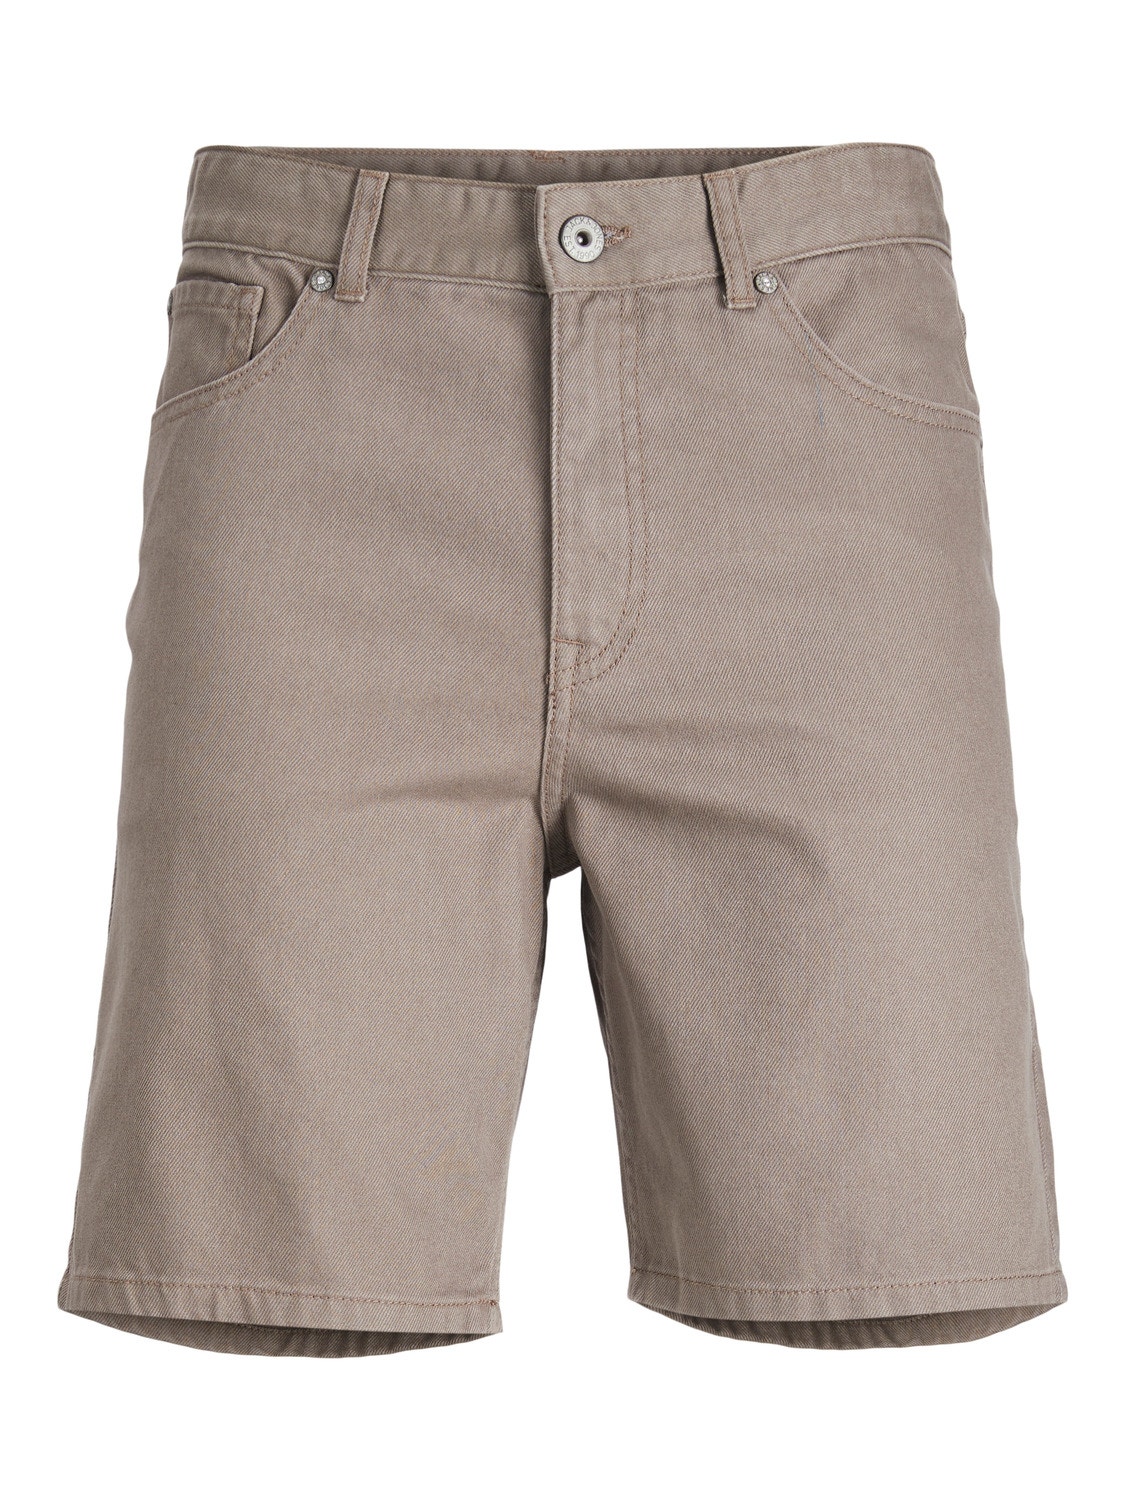 Jack & Jones Relaxed Fit Denim shorts -Falcon - 12229805